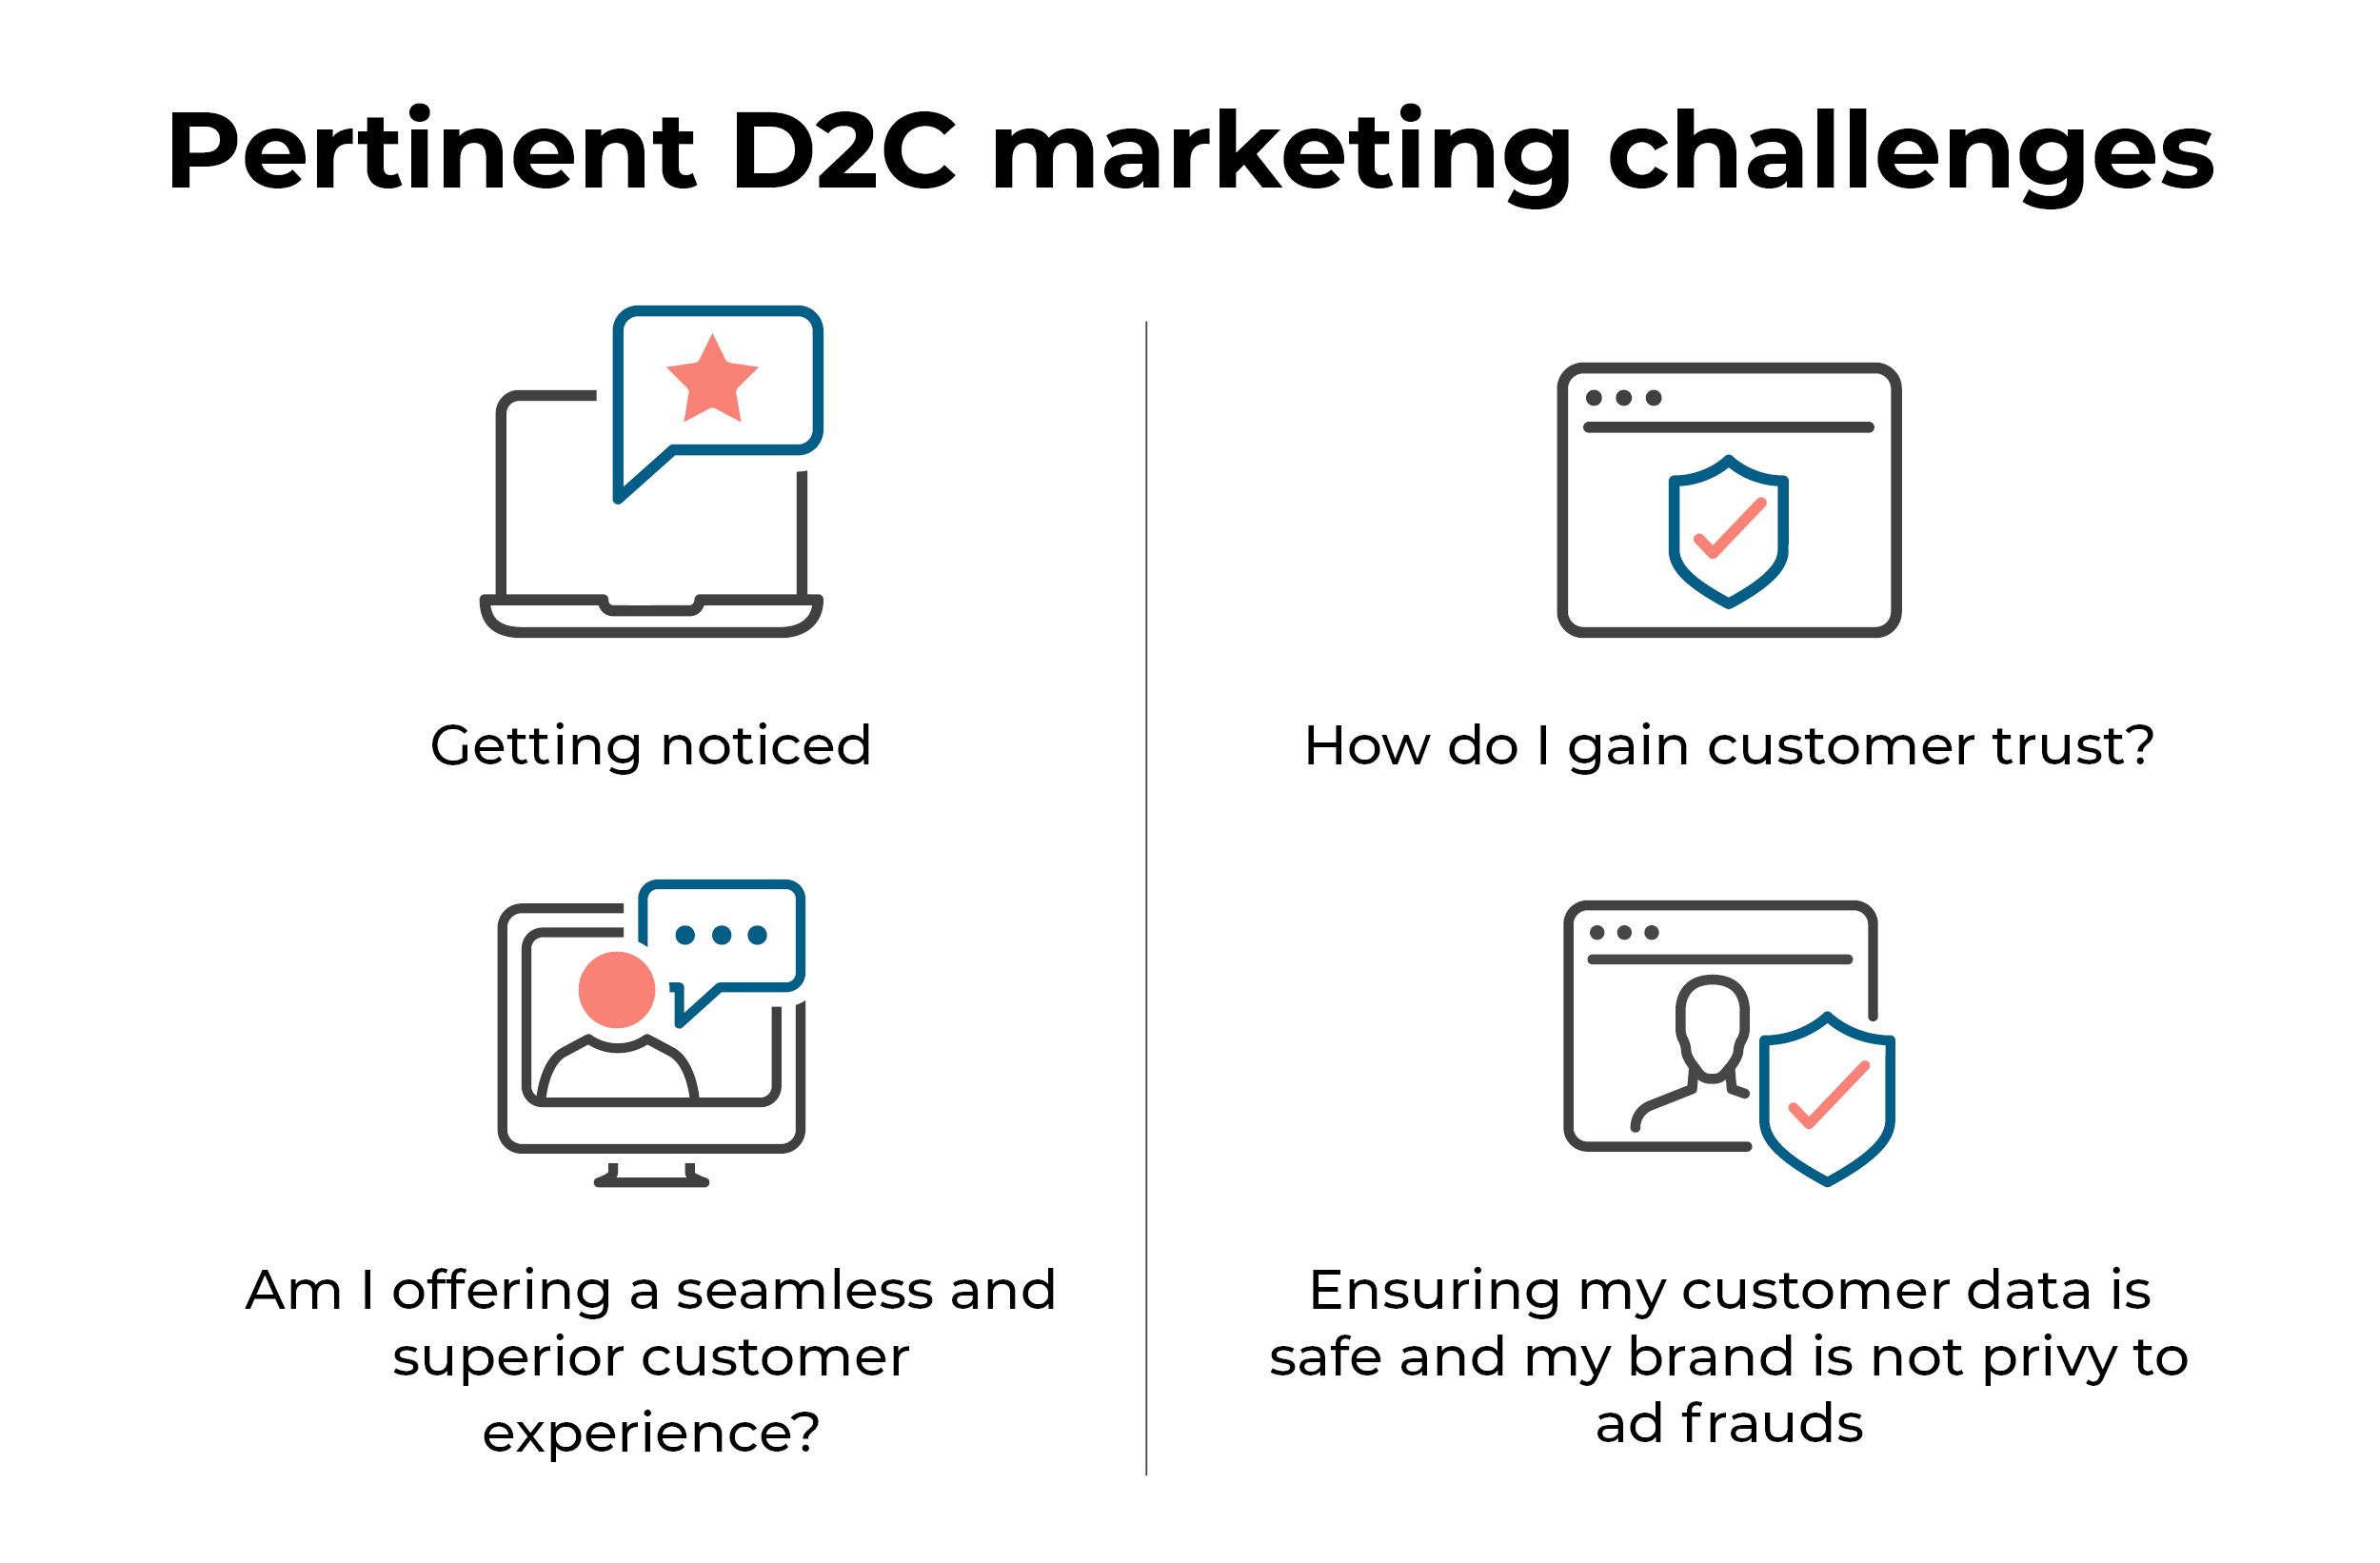 d2c marketing challenges